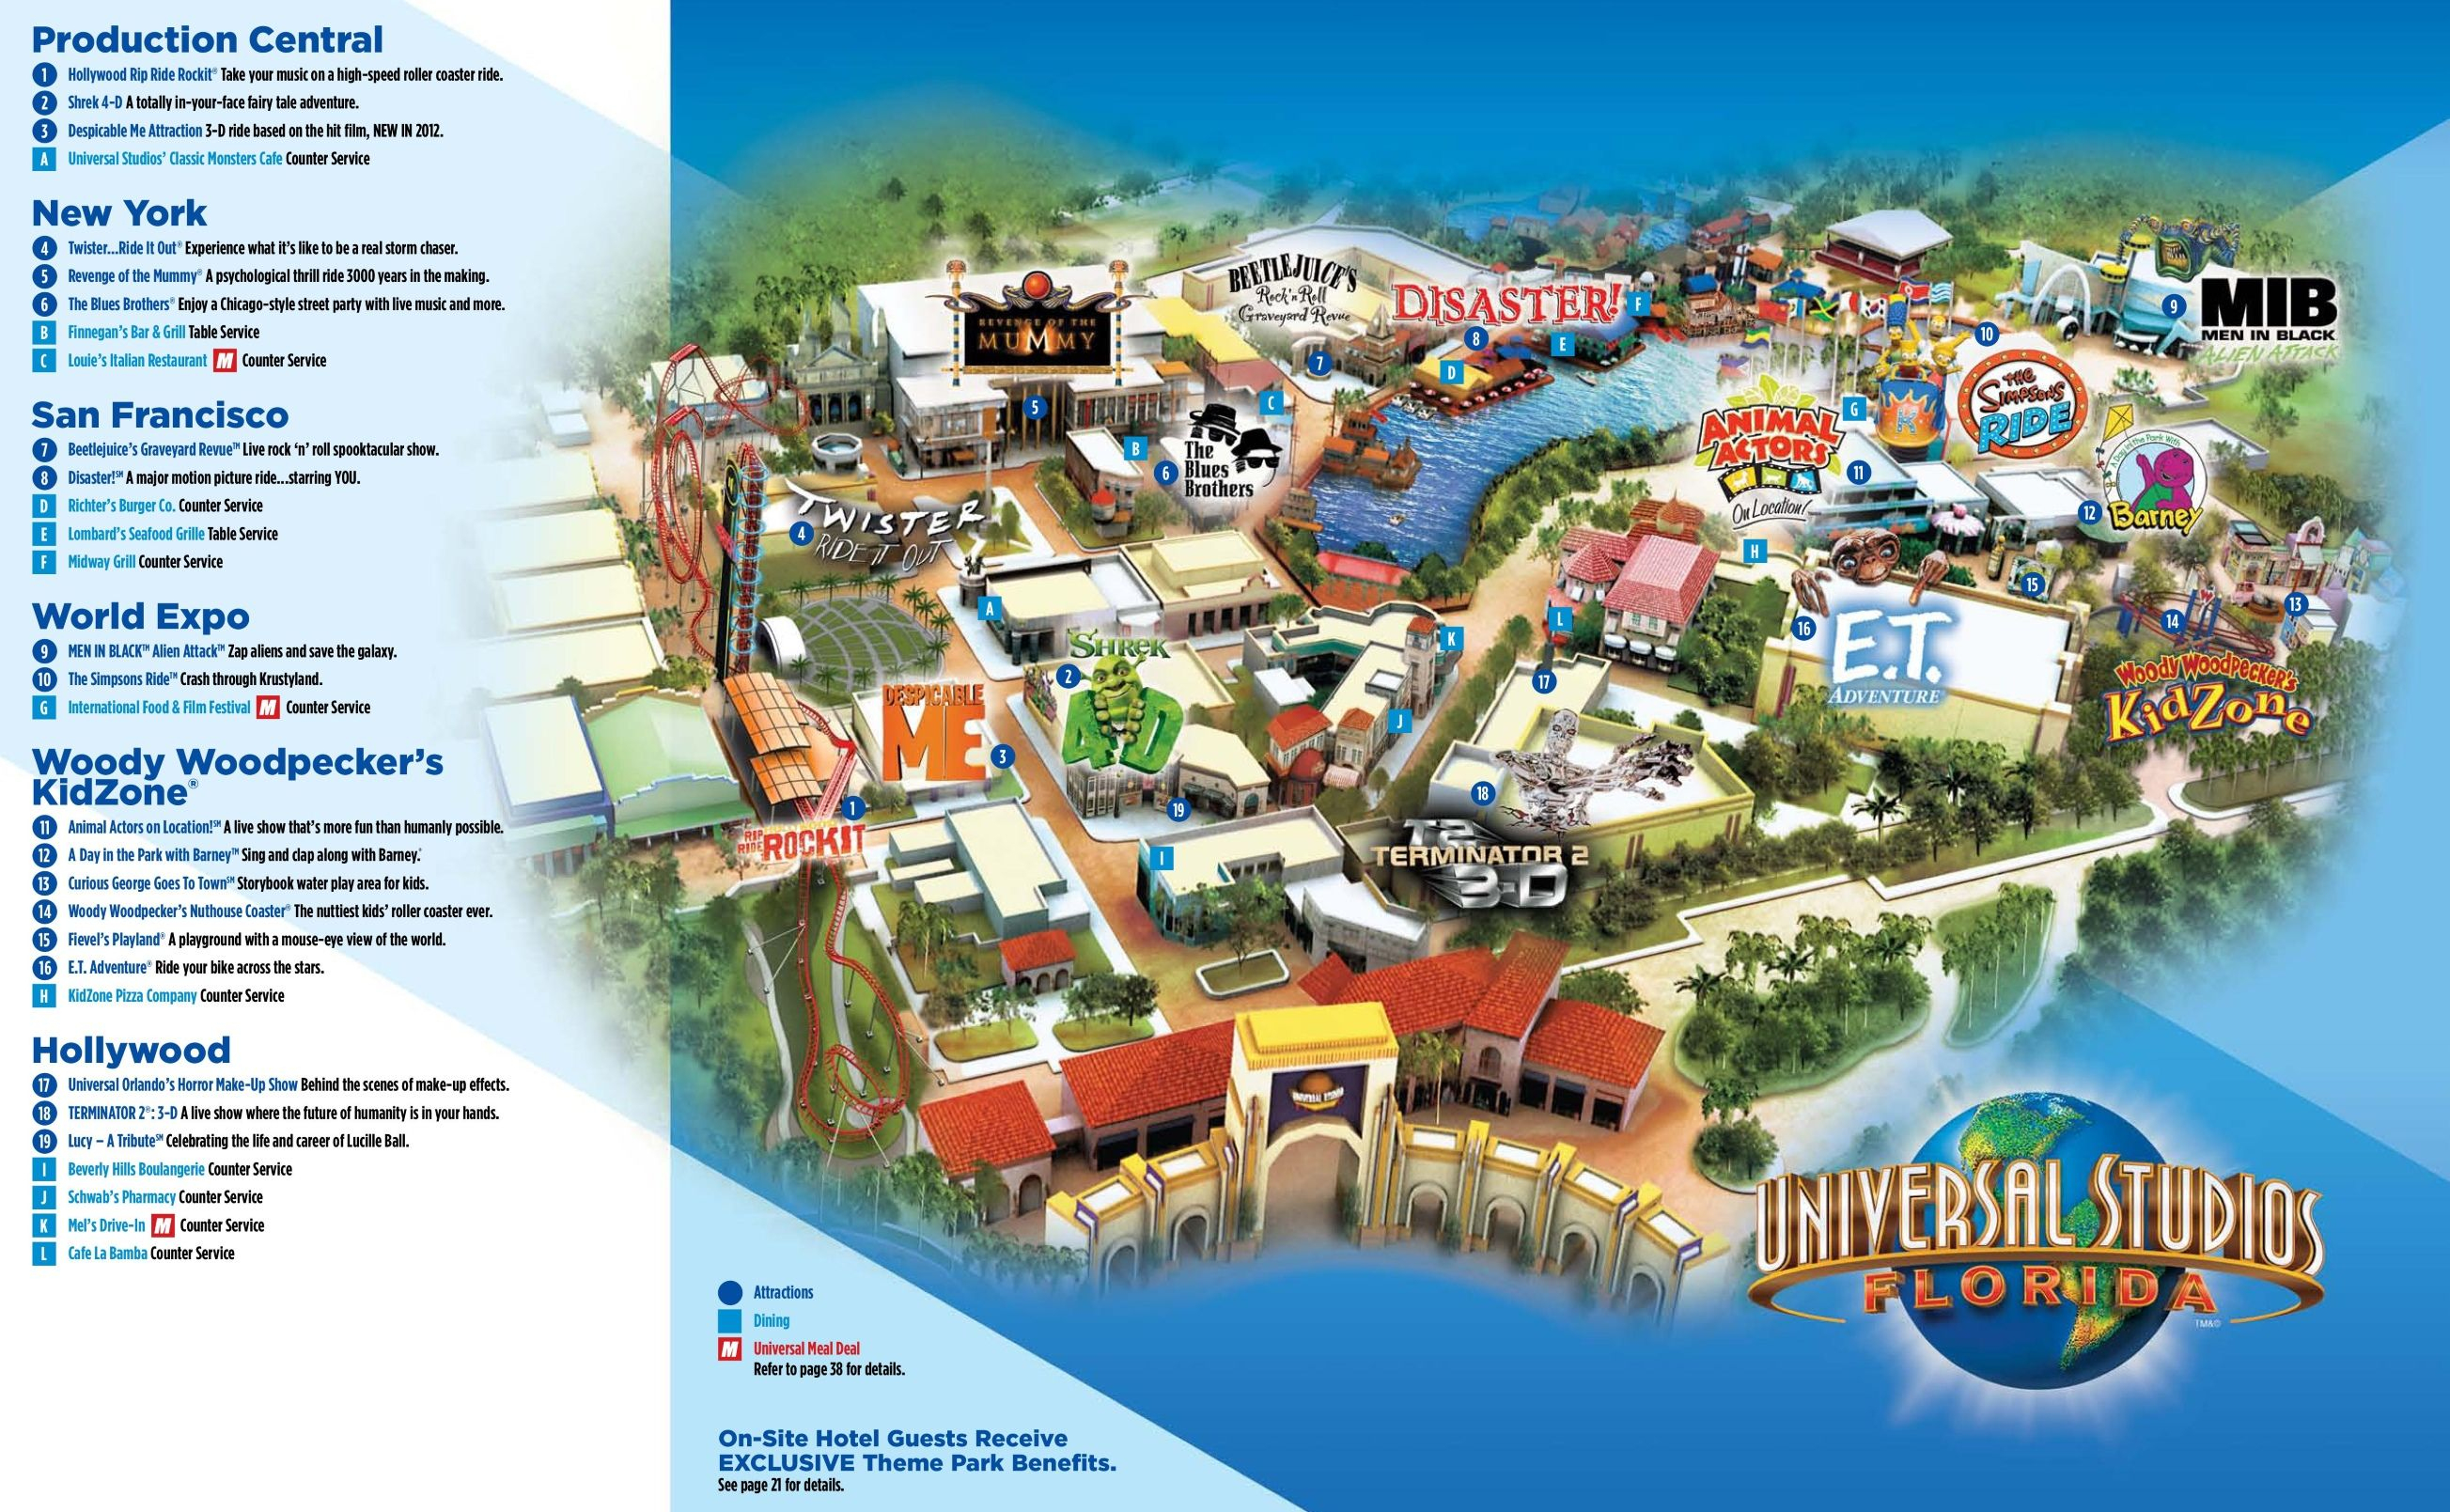 Orlando Universal Studios Florida Map | Travel: Orlando, Fl - Universal Studios Florida Map 2017